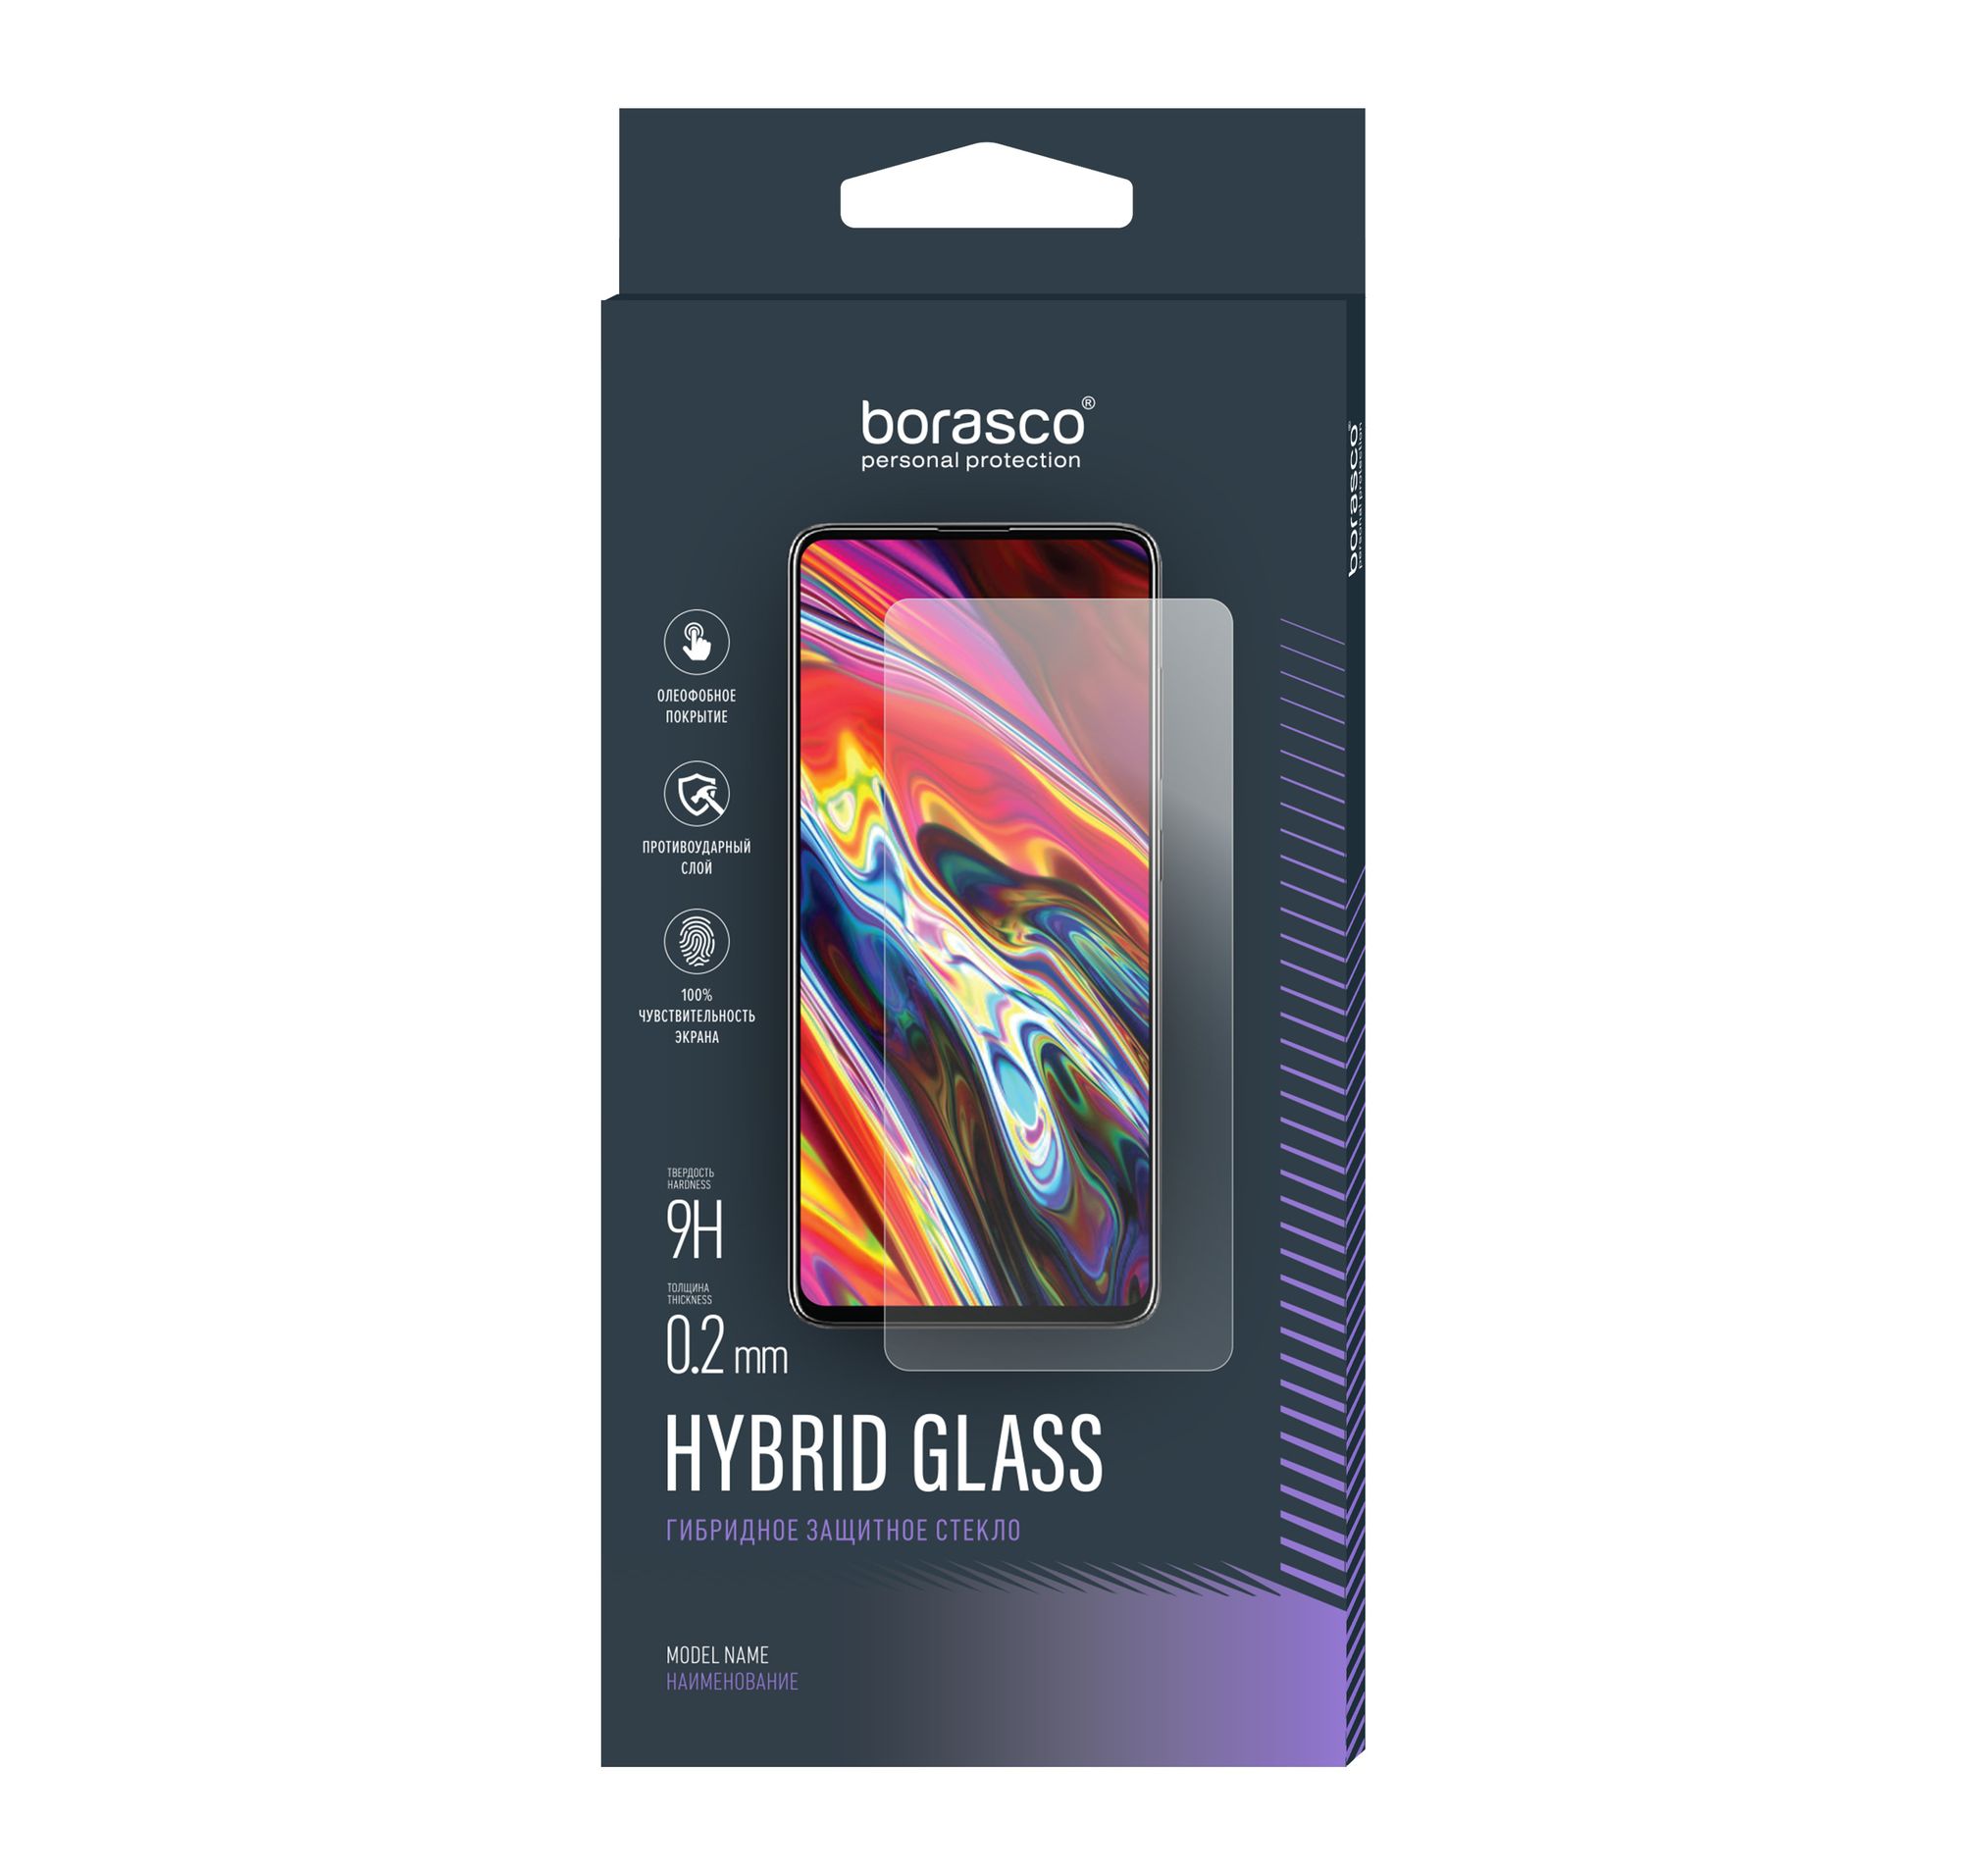 Стекло защитное Hybrid Glass VSP 0,26 мм для Sony Xperia XZ защитное стекло для sony g8141 g8142 xz premium xz premium dual